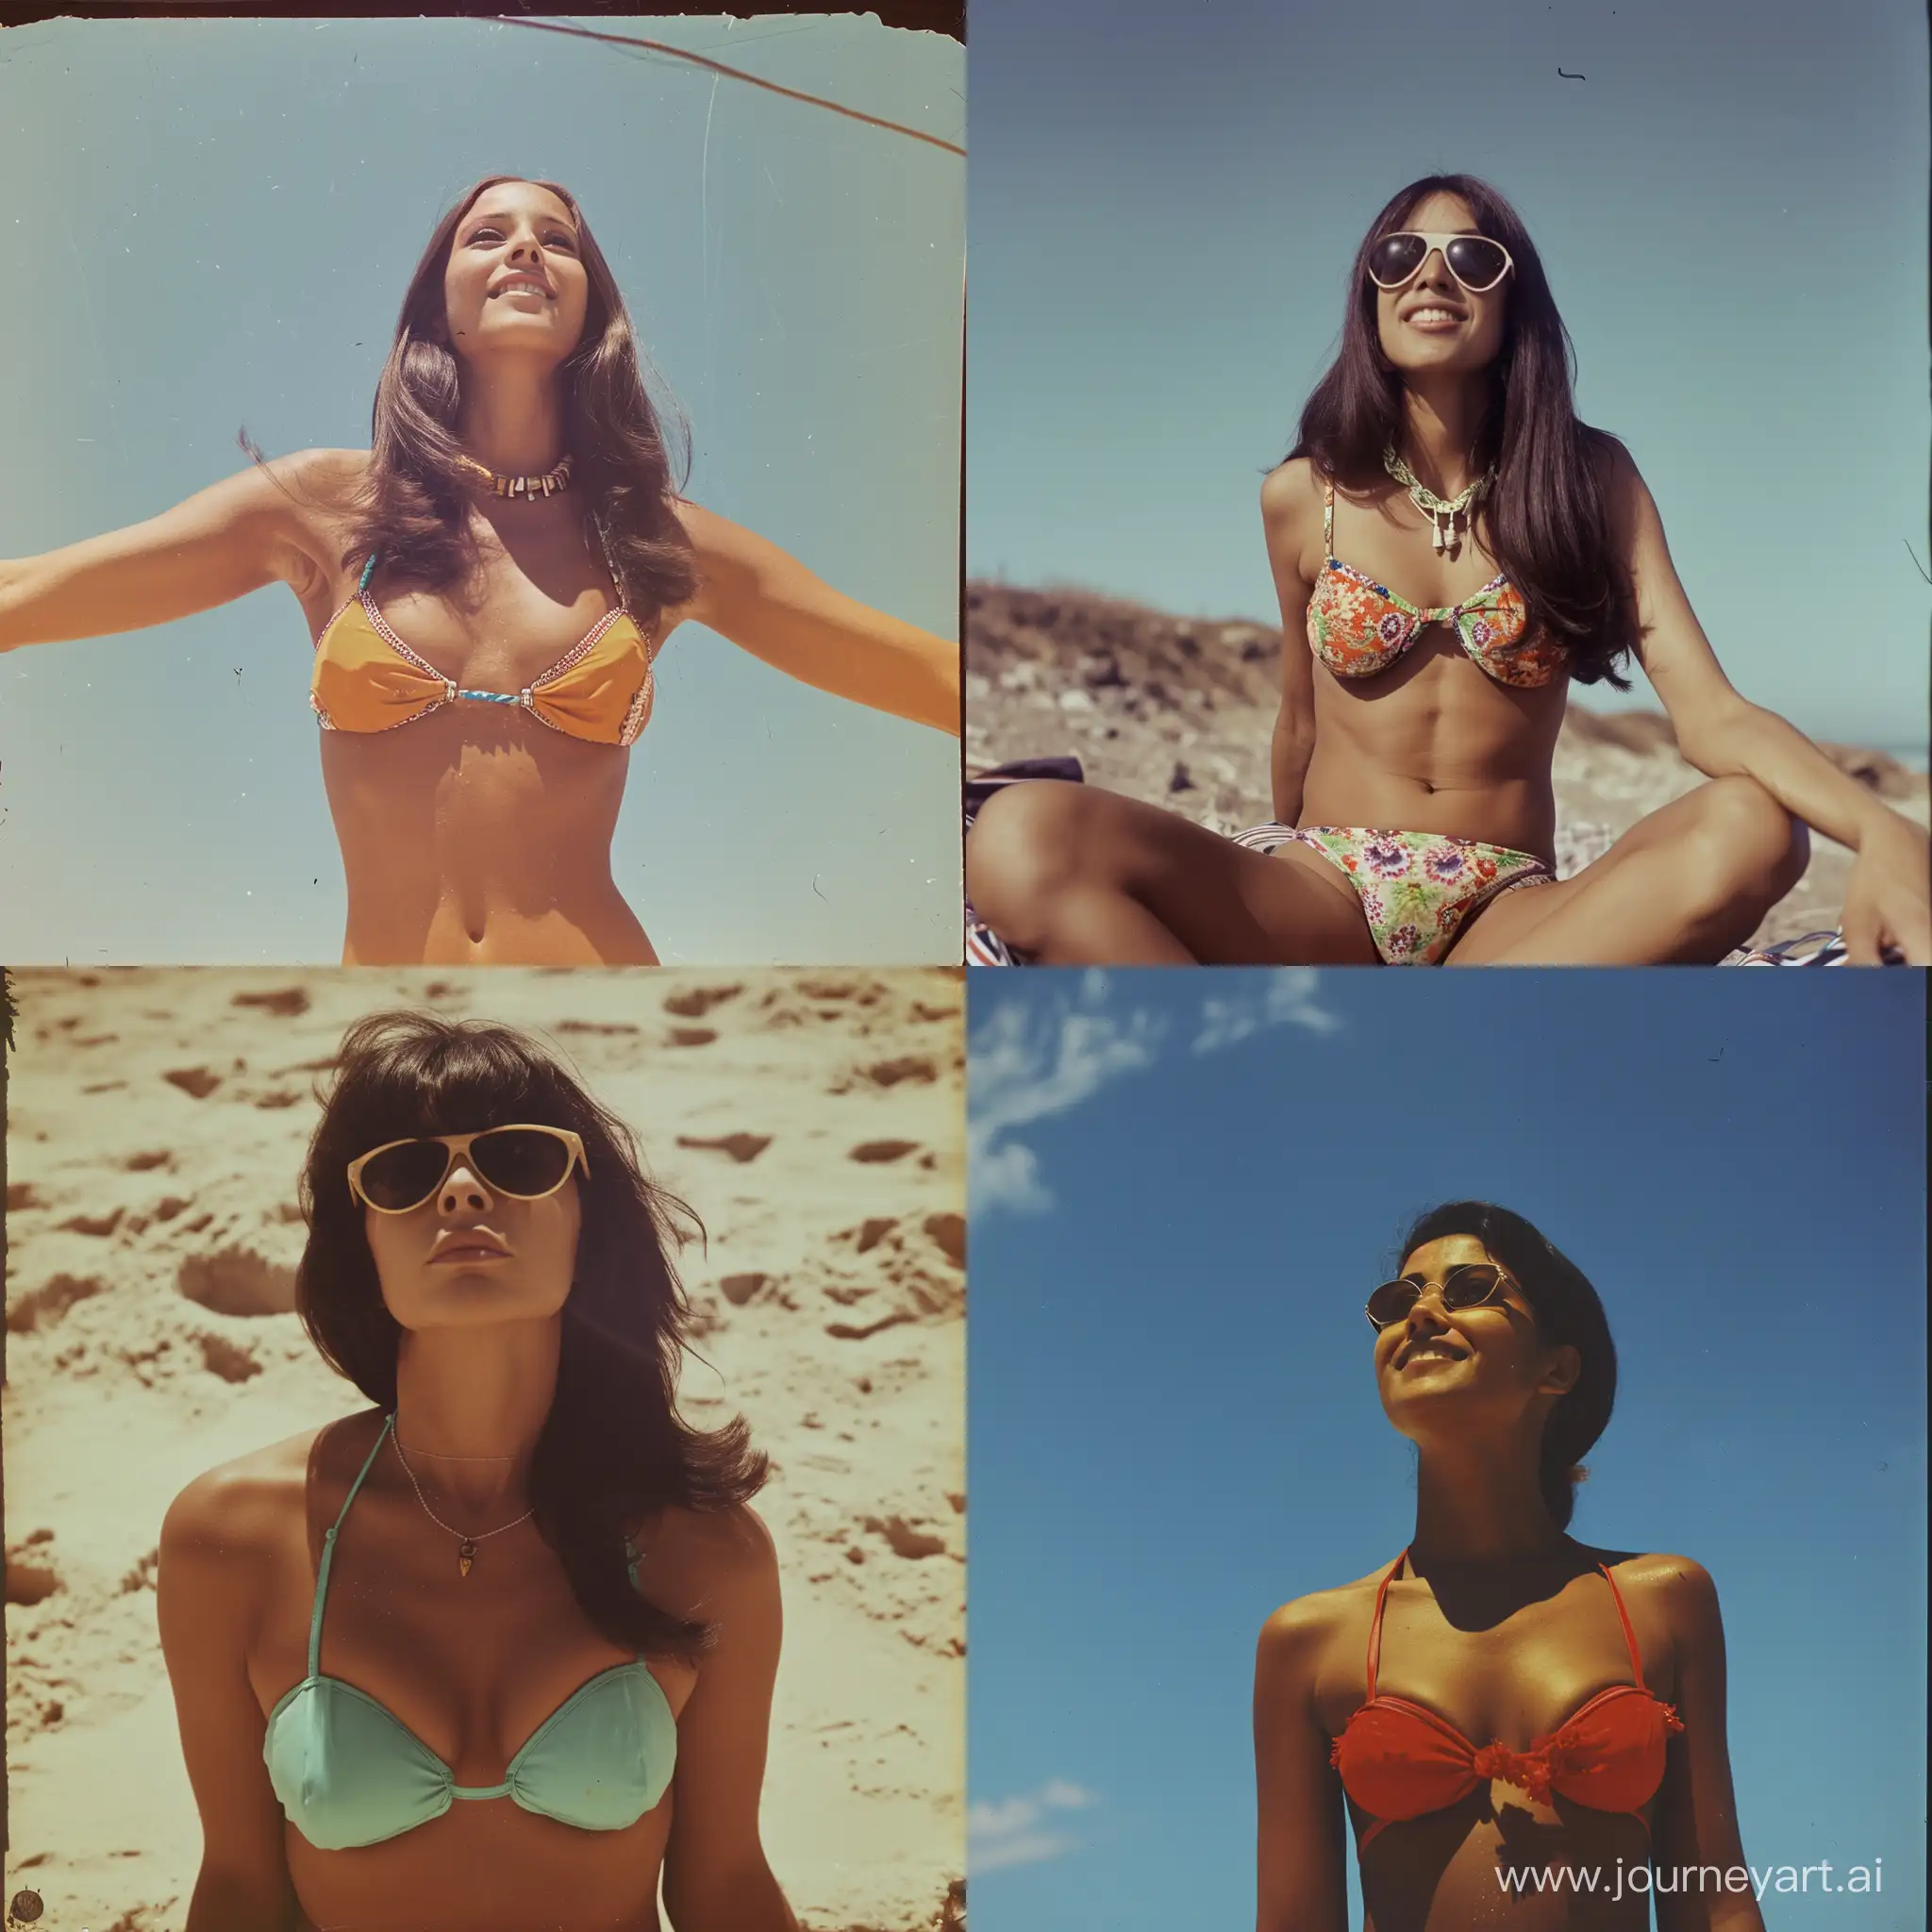 joan baez in bikini, 1964, color, 35mm
